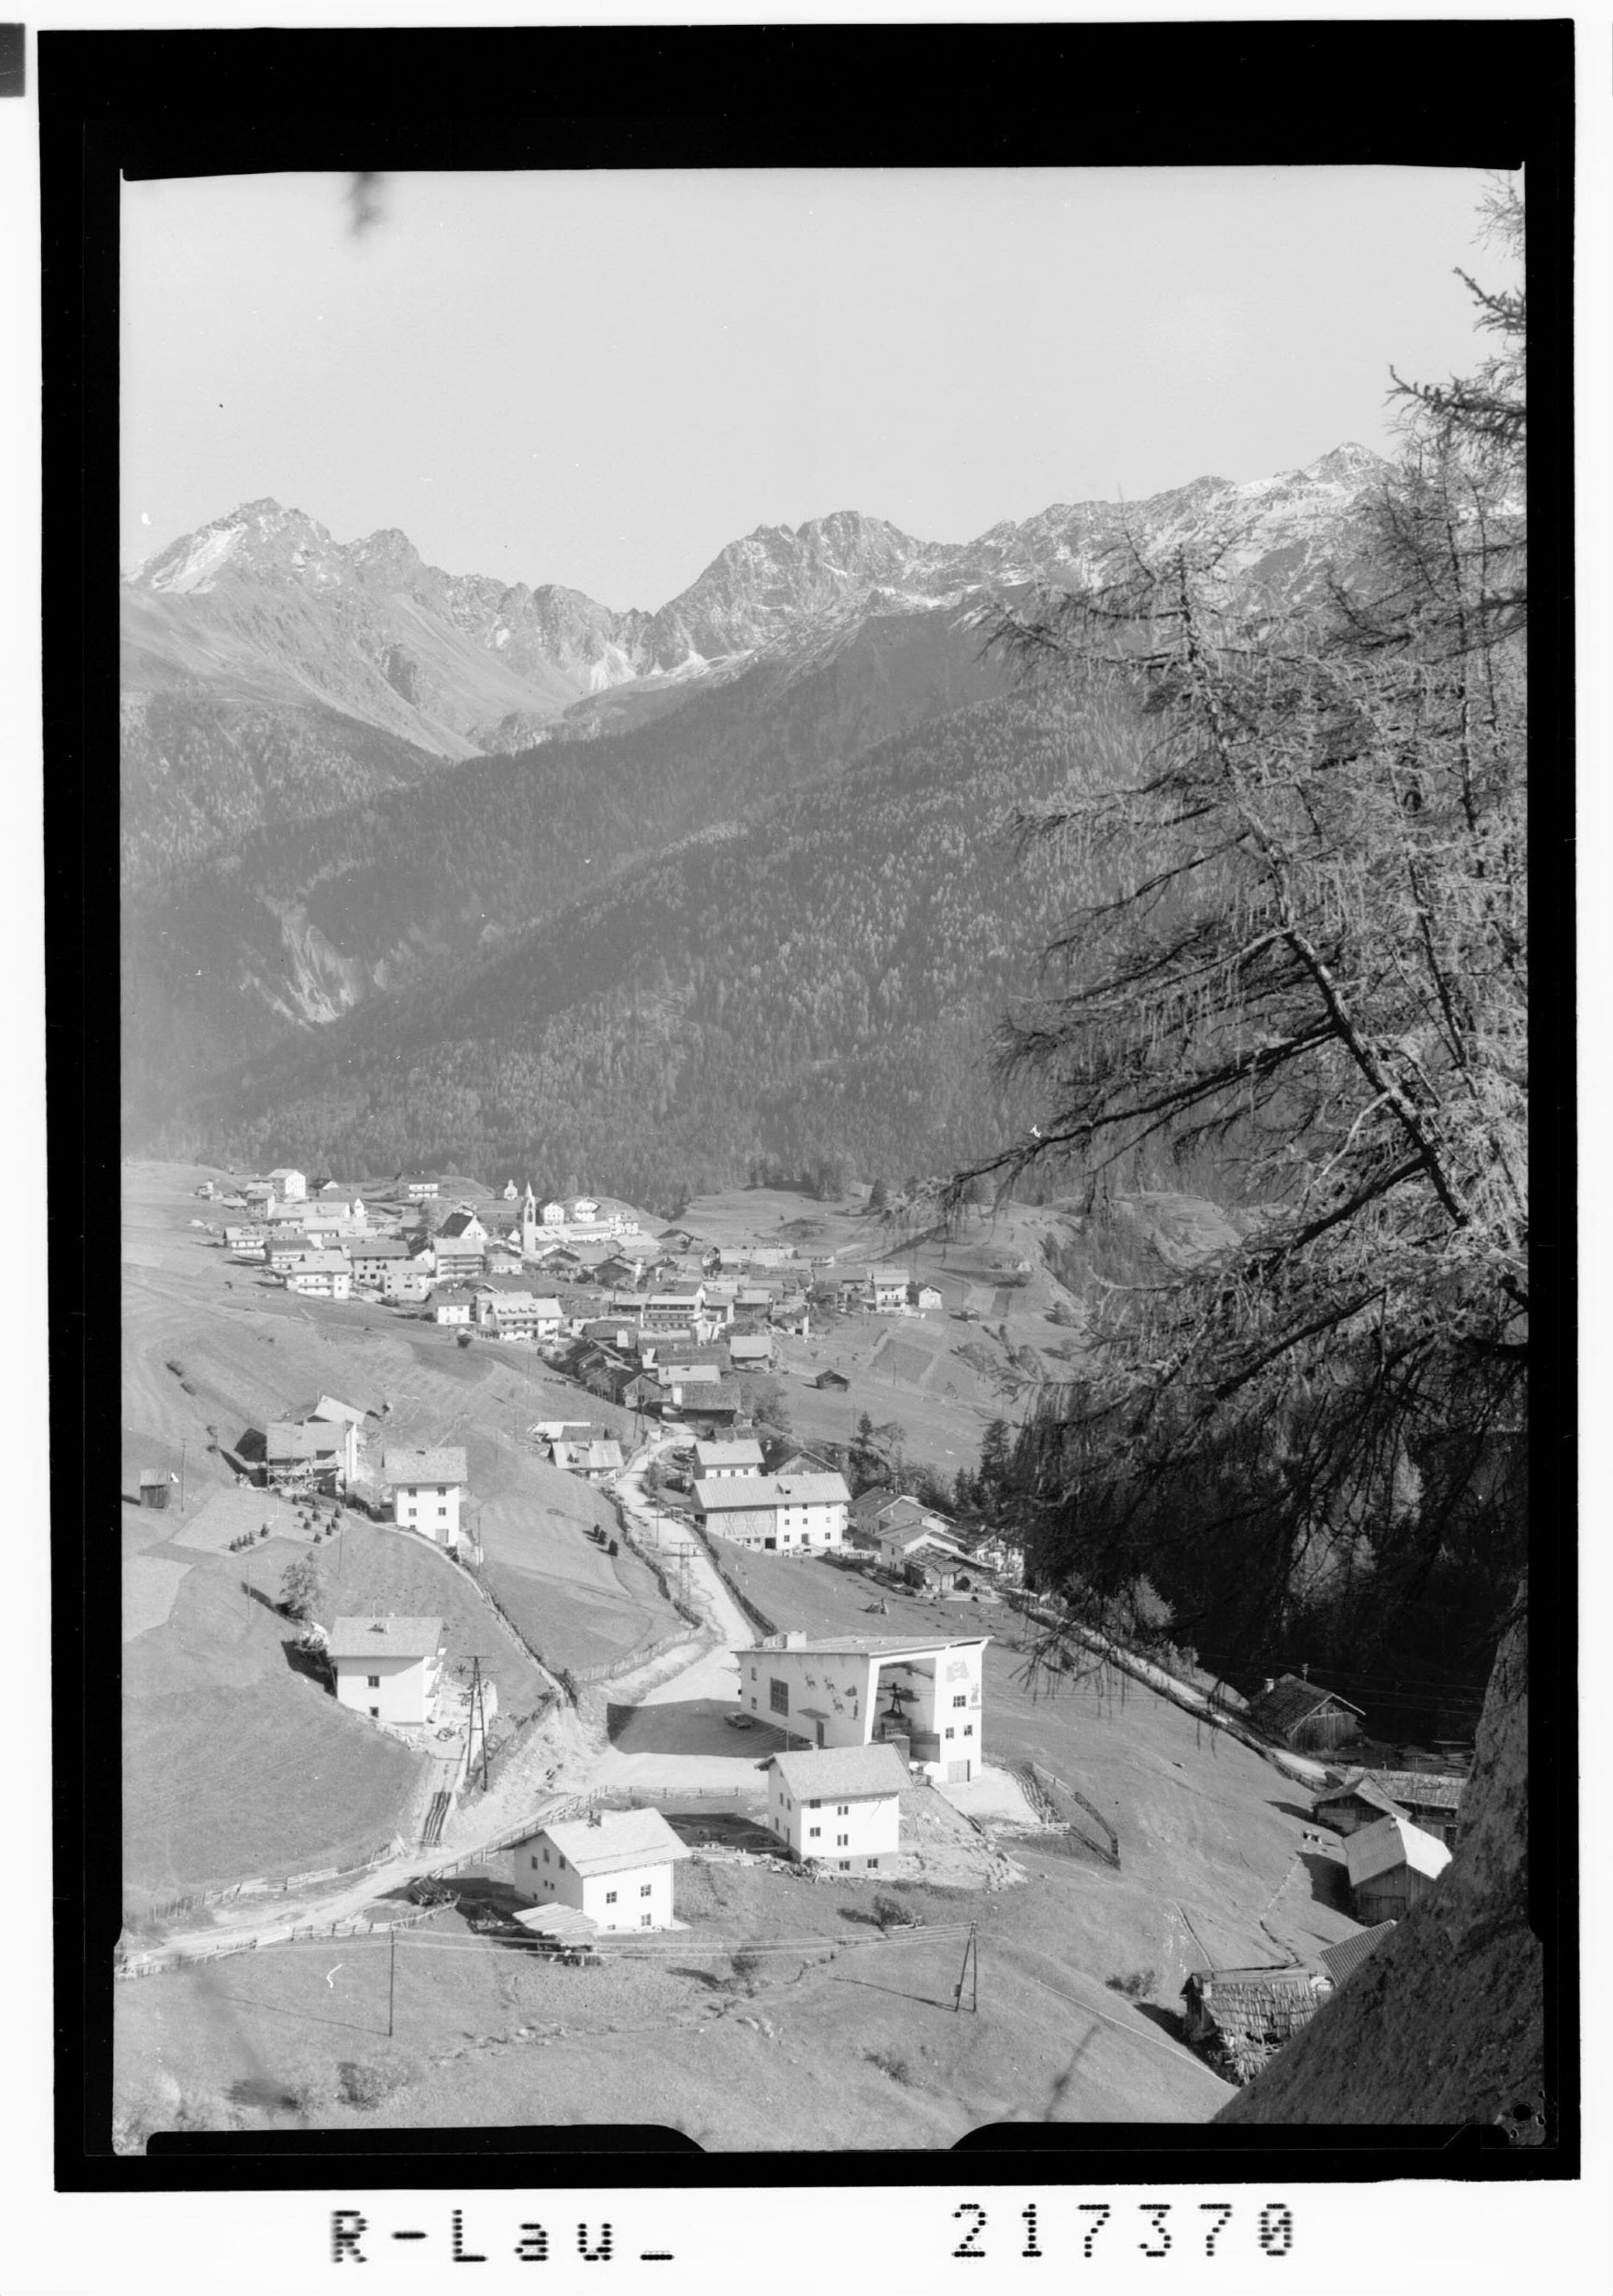 Serfaus im Oberinntal / Tirol 1427 m></div>


    <hr>
    <div class=